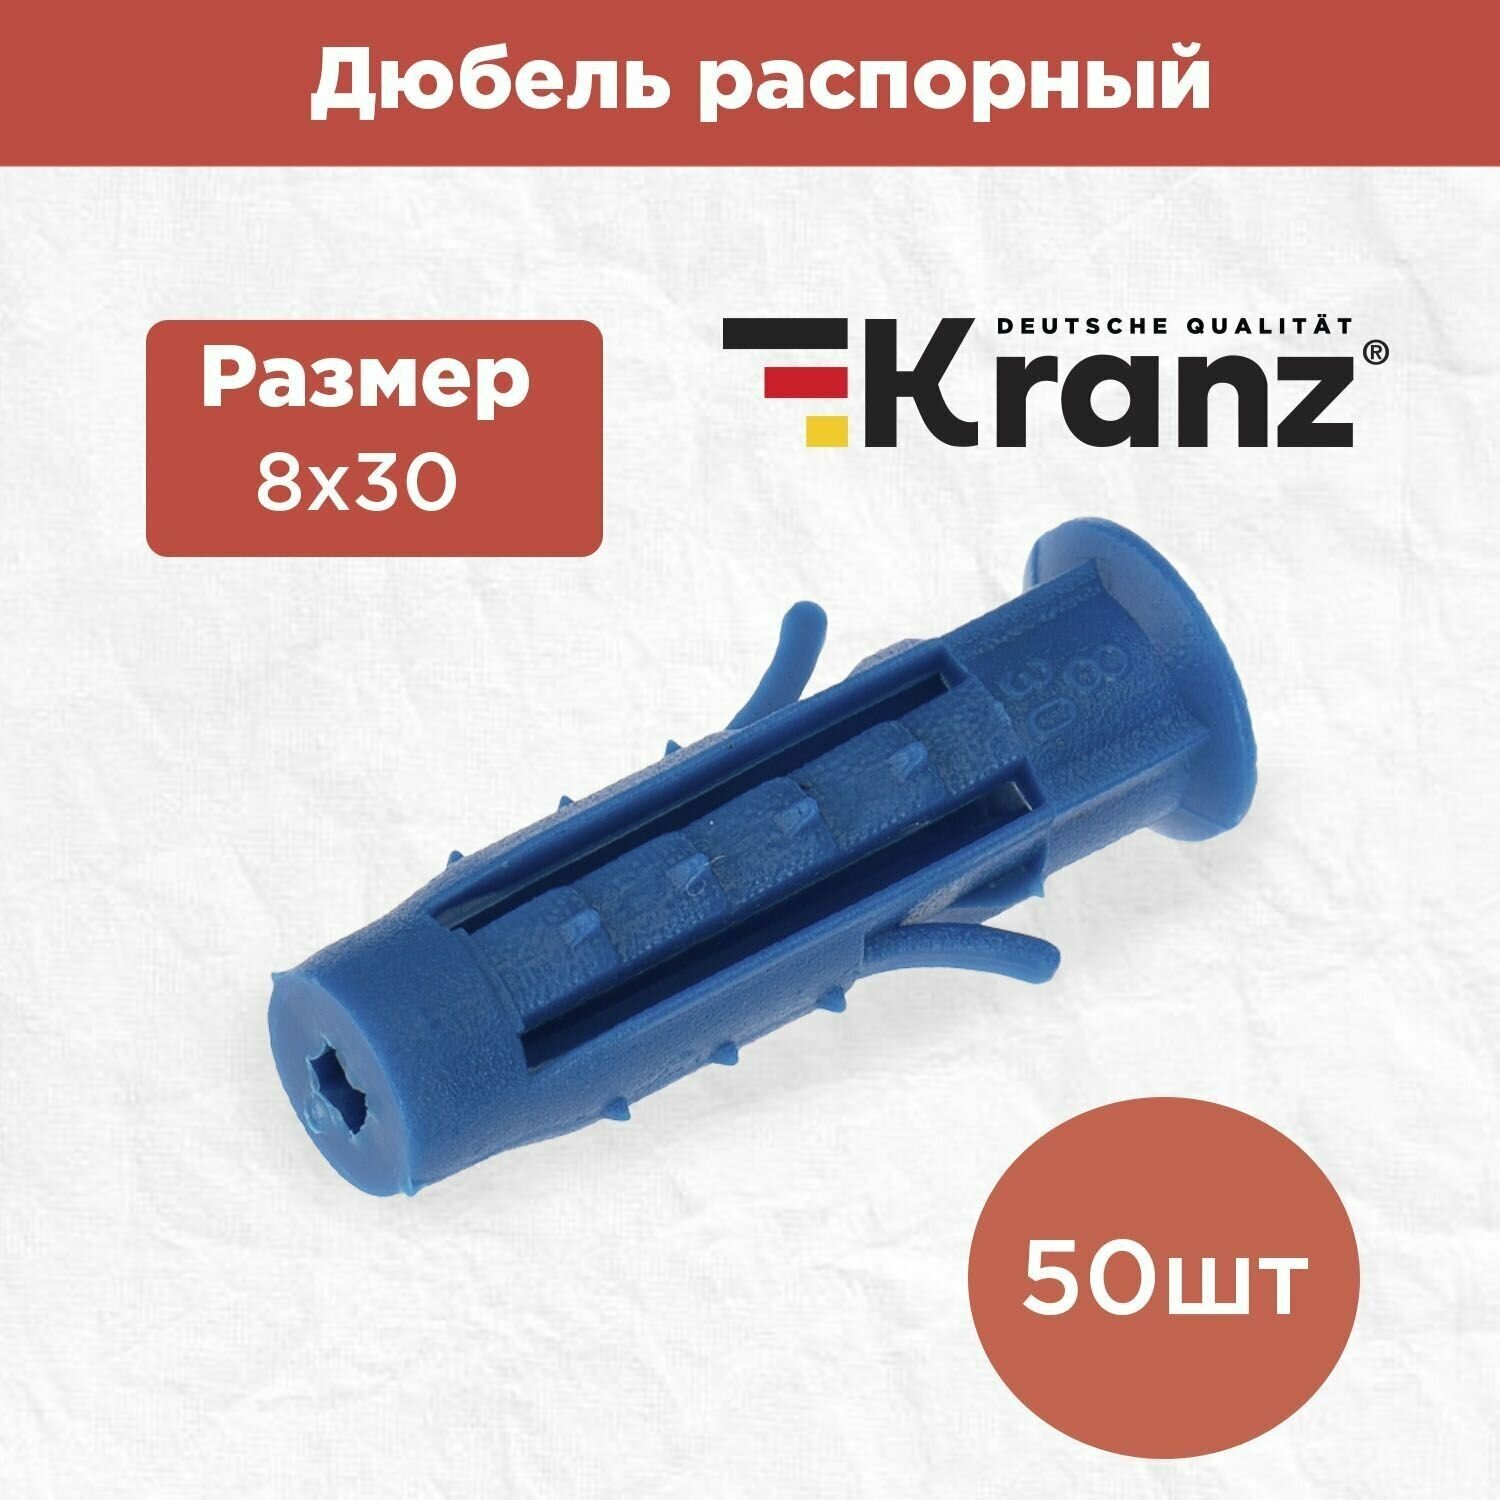 Kranz Дюбель распорный 8х30 синий пакет (50 шт./уп.)